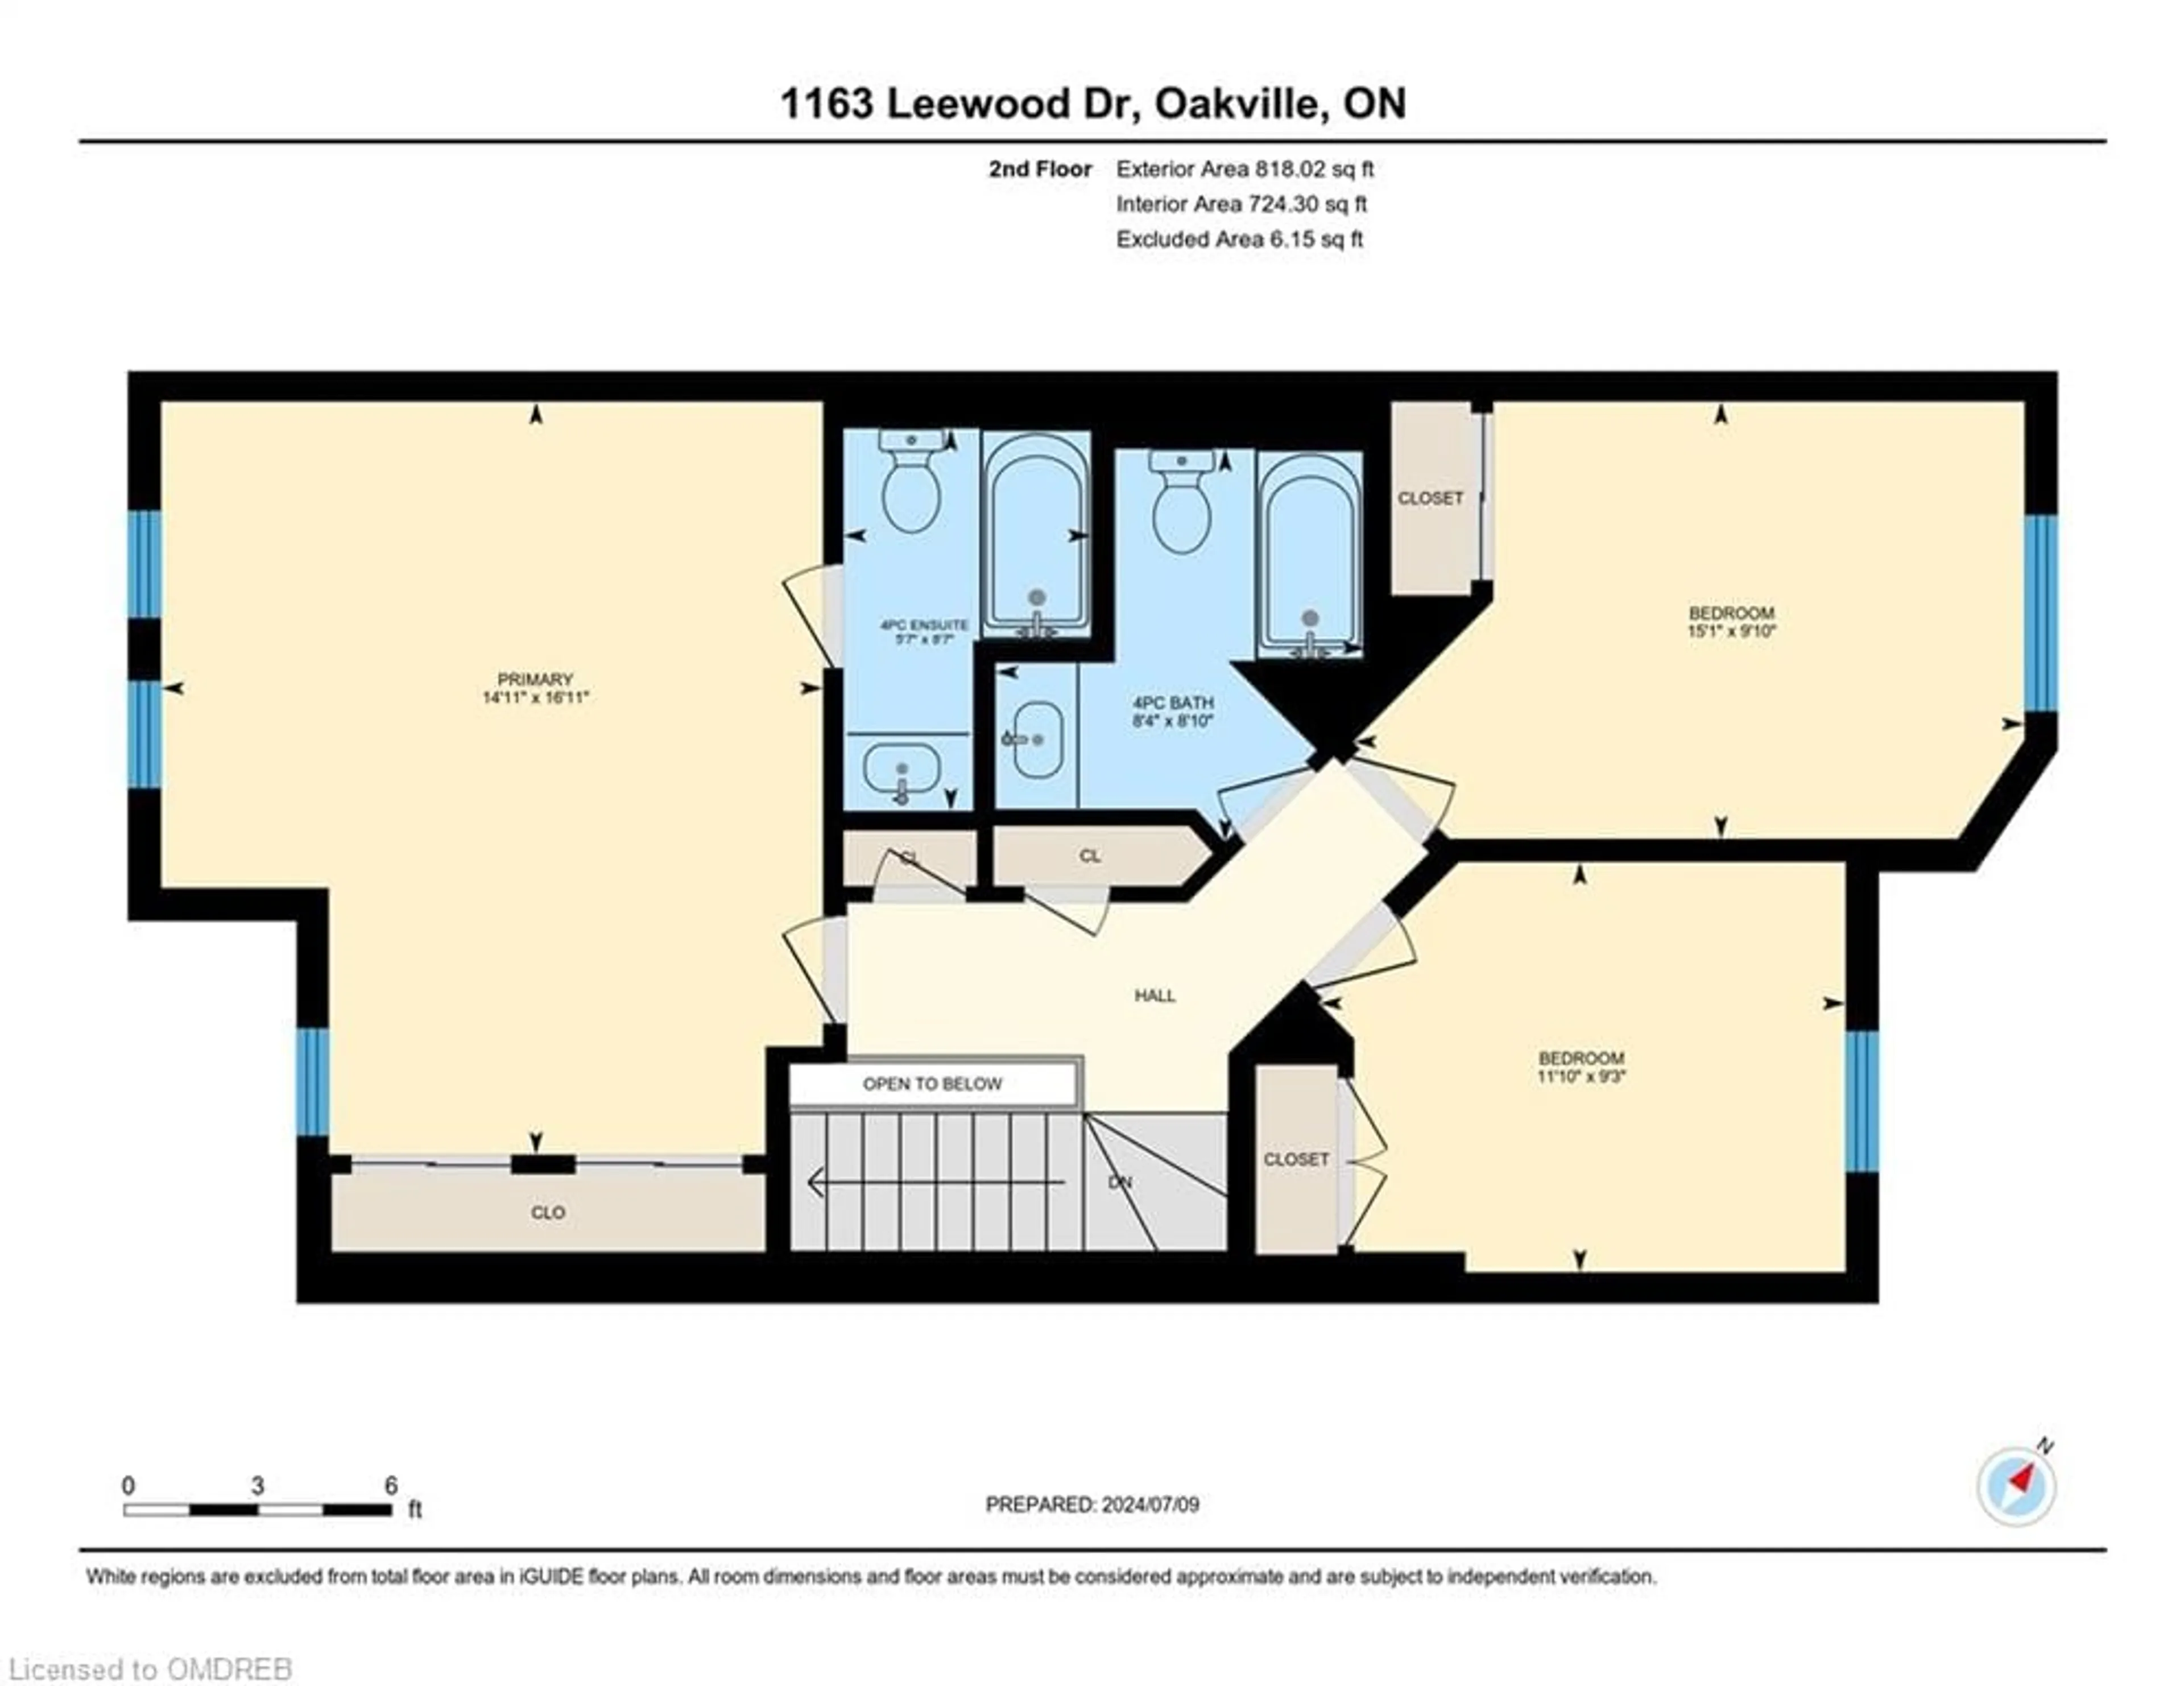 Floor plan for 1163 Leewood Dr, Oakville Ontario L6M 3B9